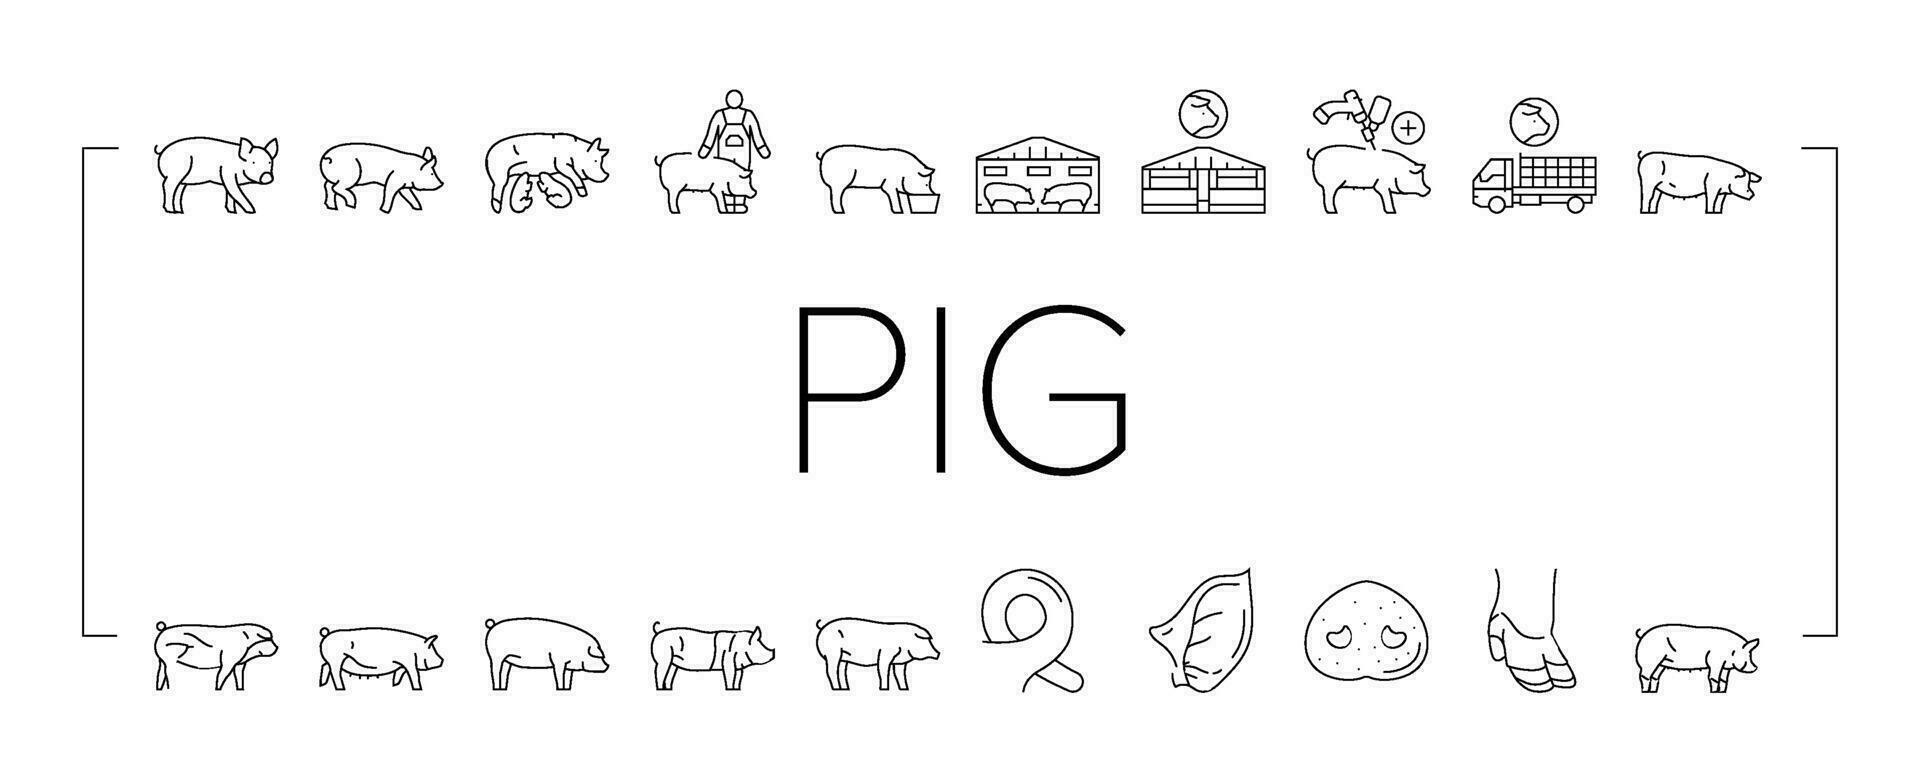 pork pig farm animal piglet hog icons set vector